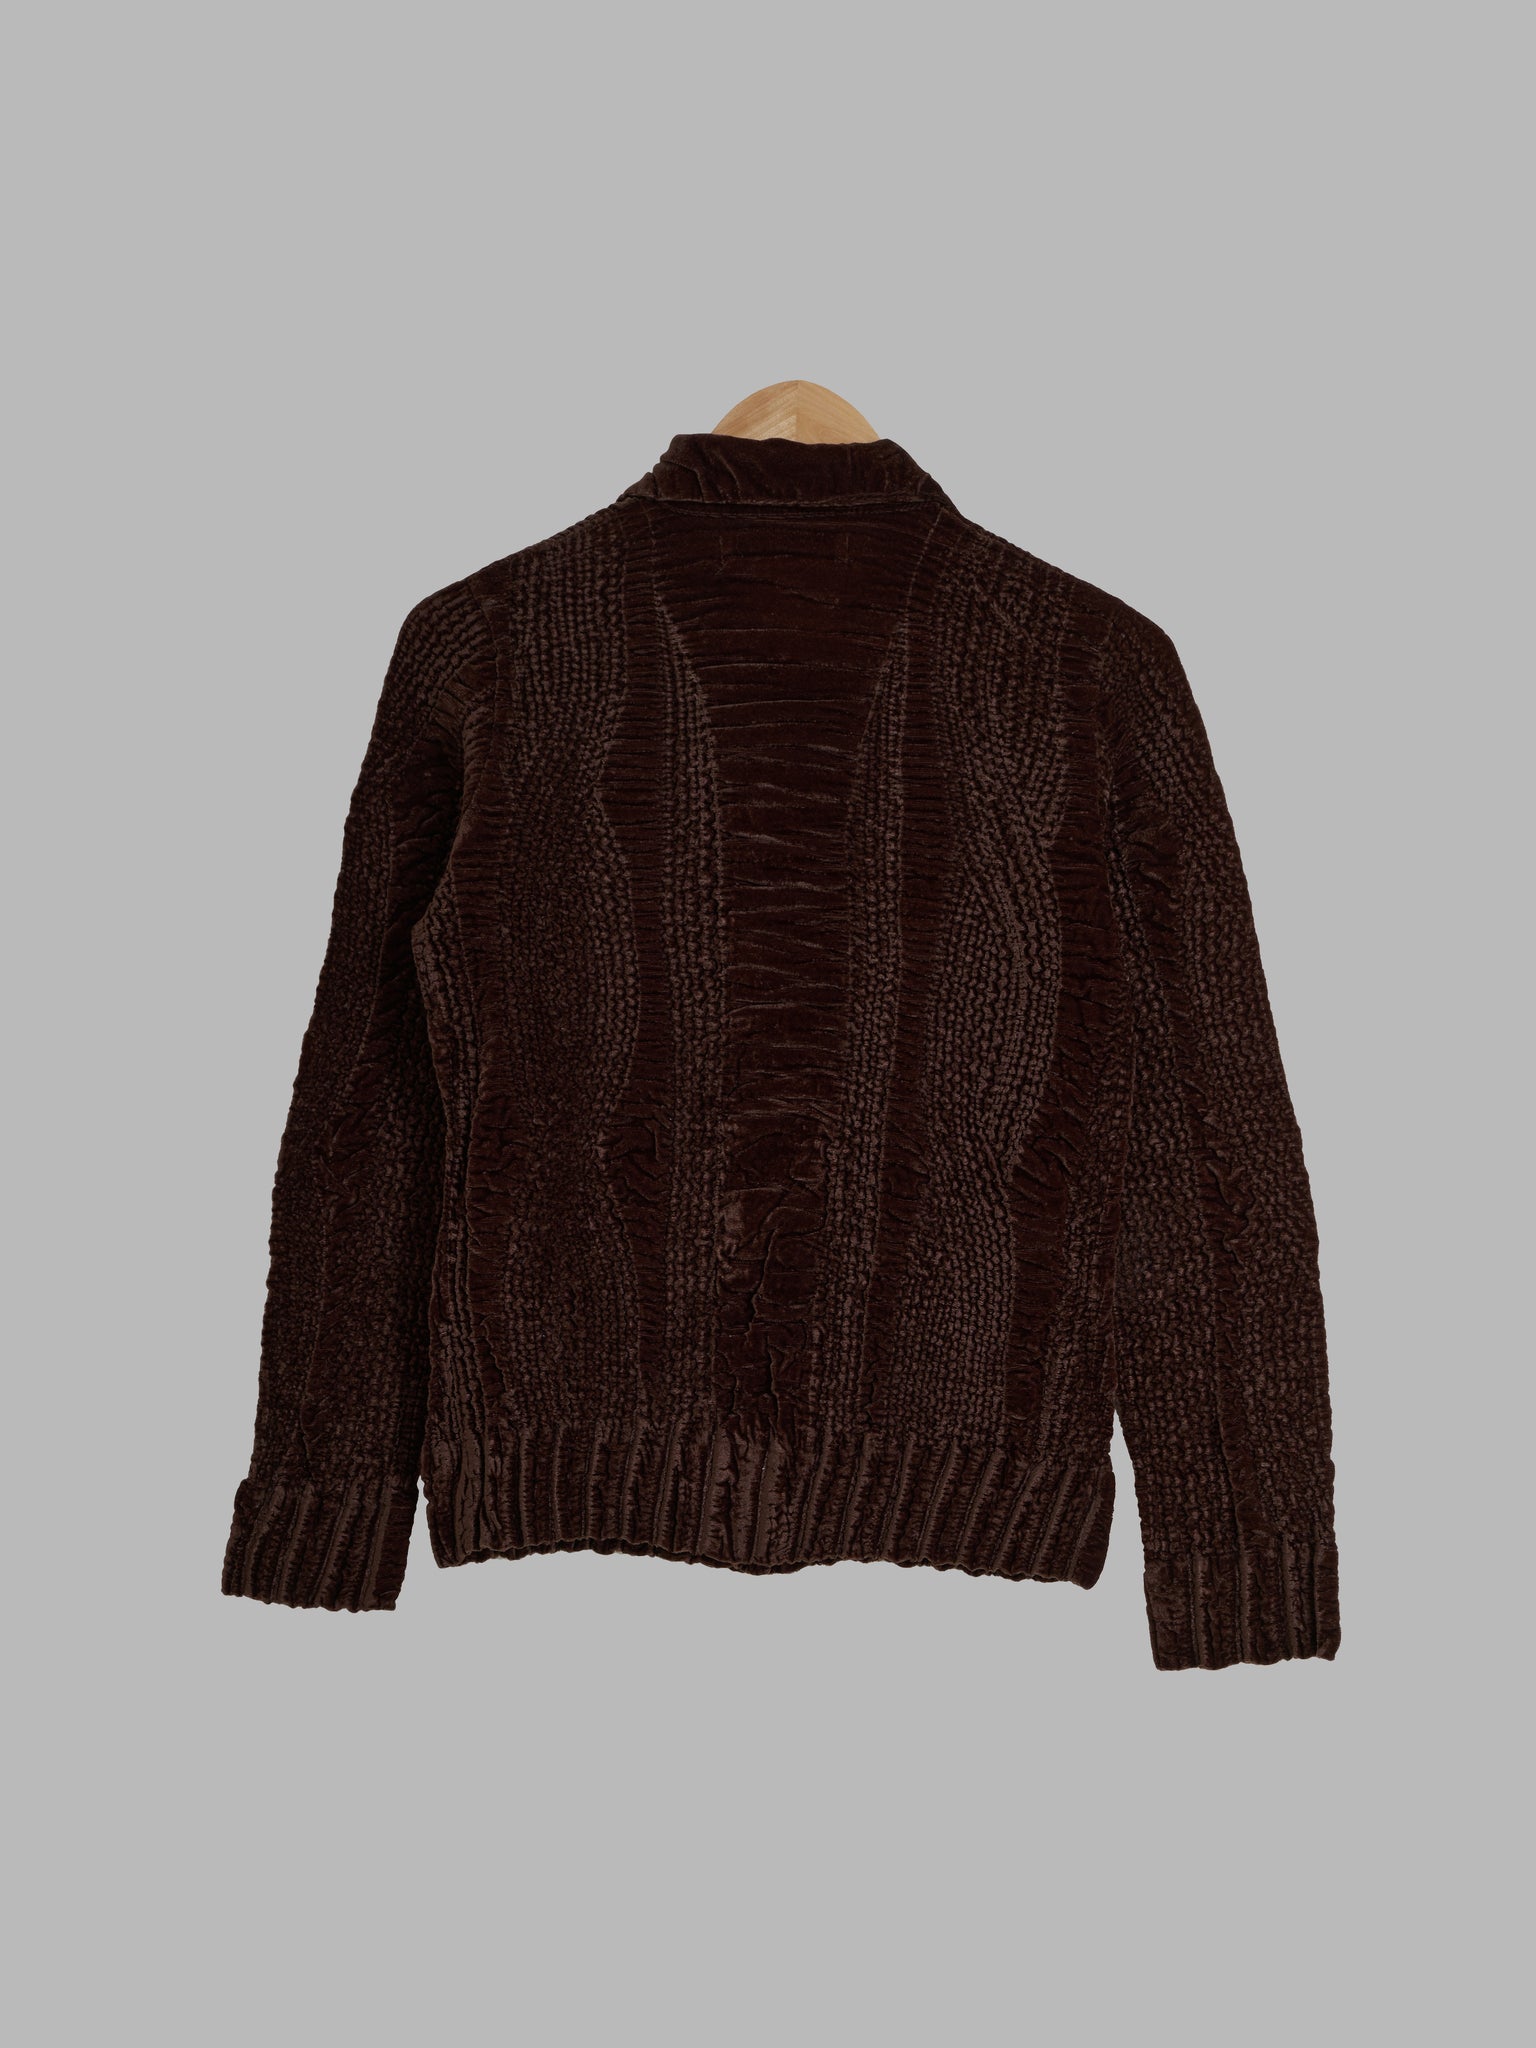 Yoshiki Hishinuma brown velour-y fabric 6 button jacket - size 2 M S